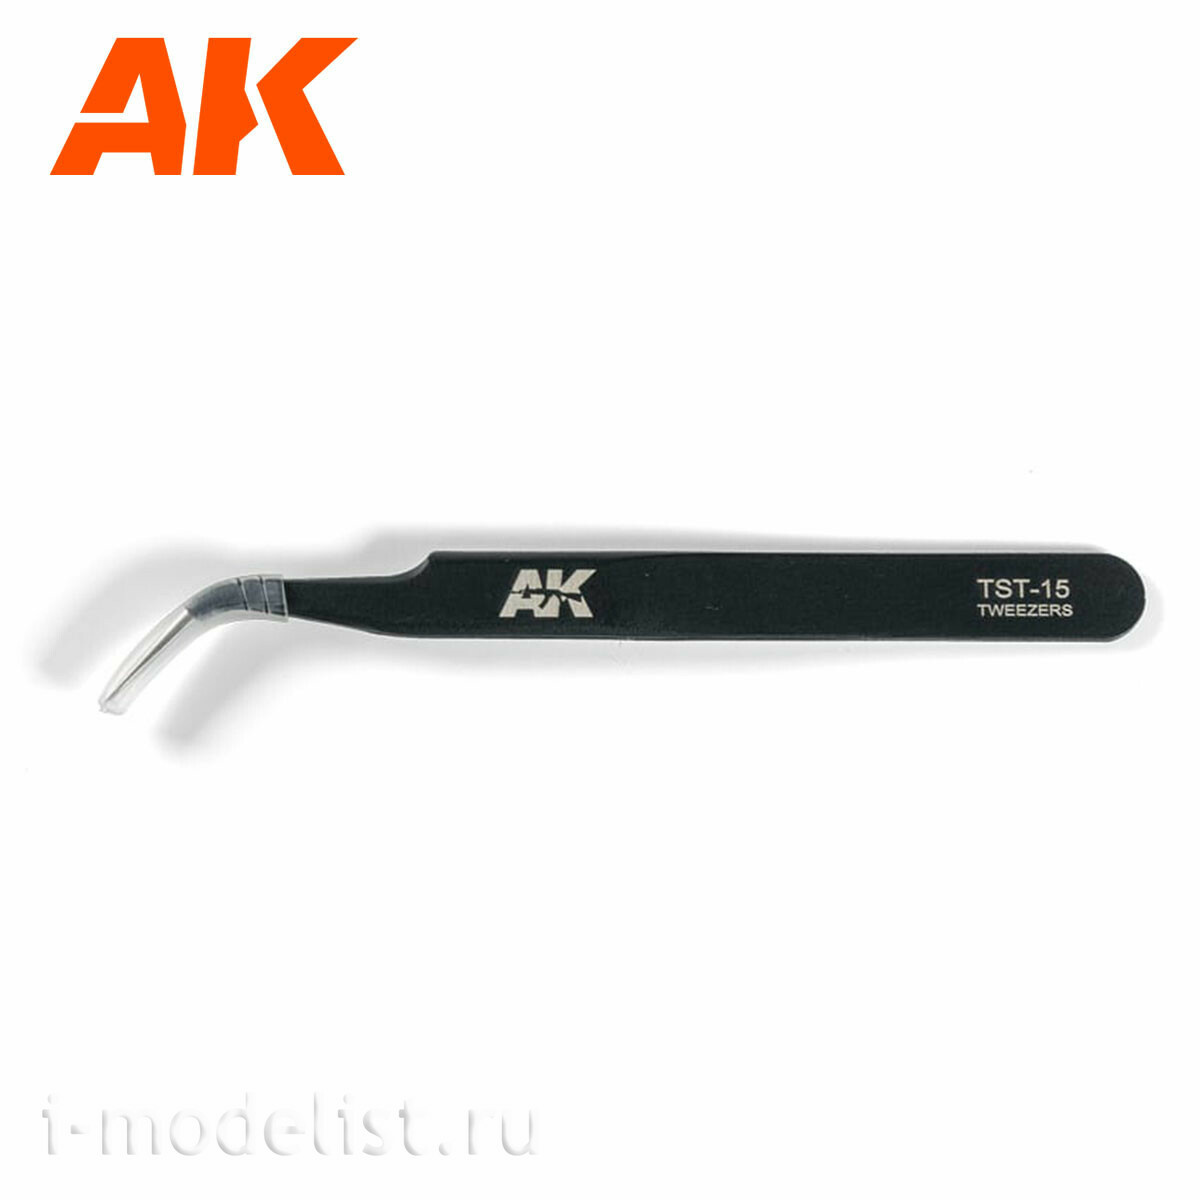 AK9007 AK Interactive Precise Curved Tweezers